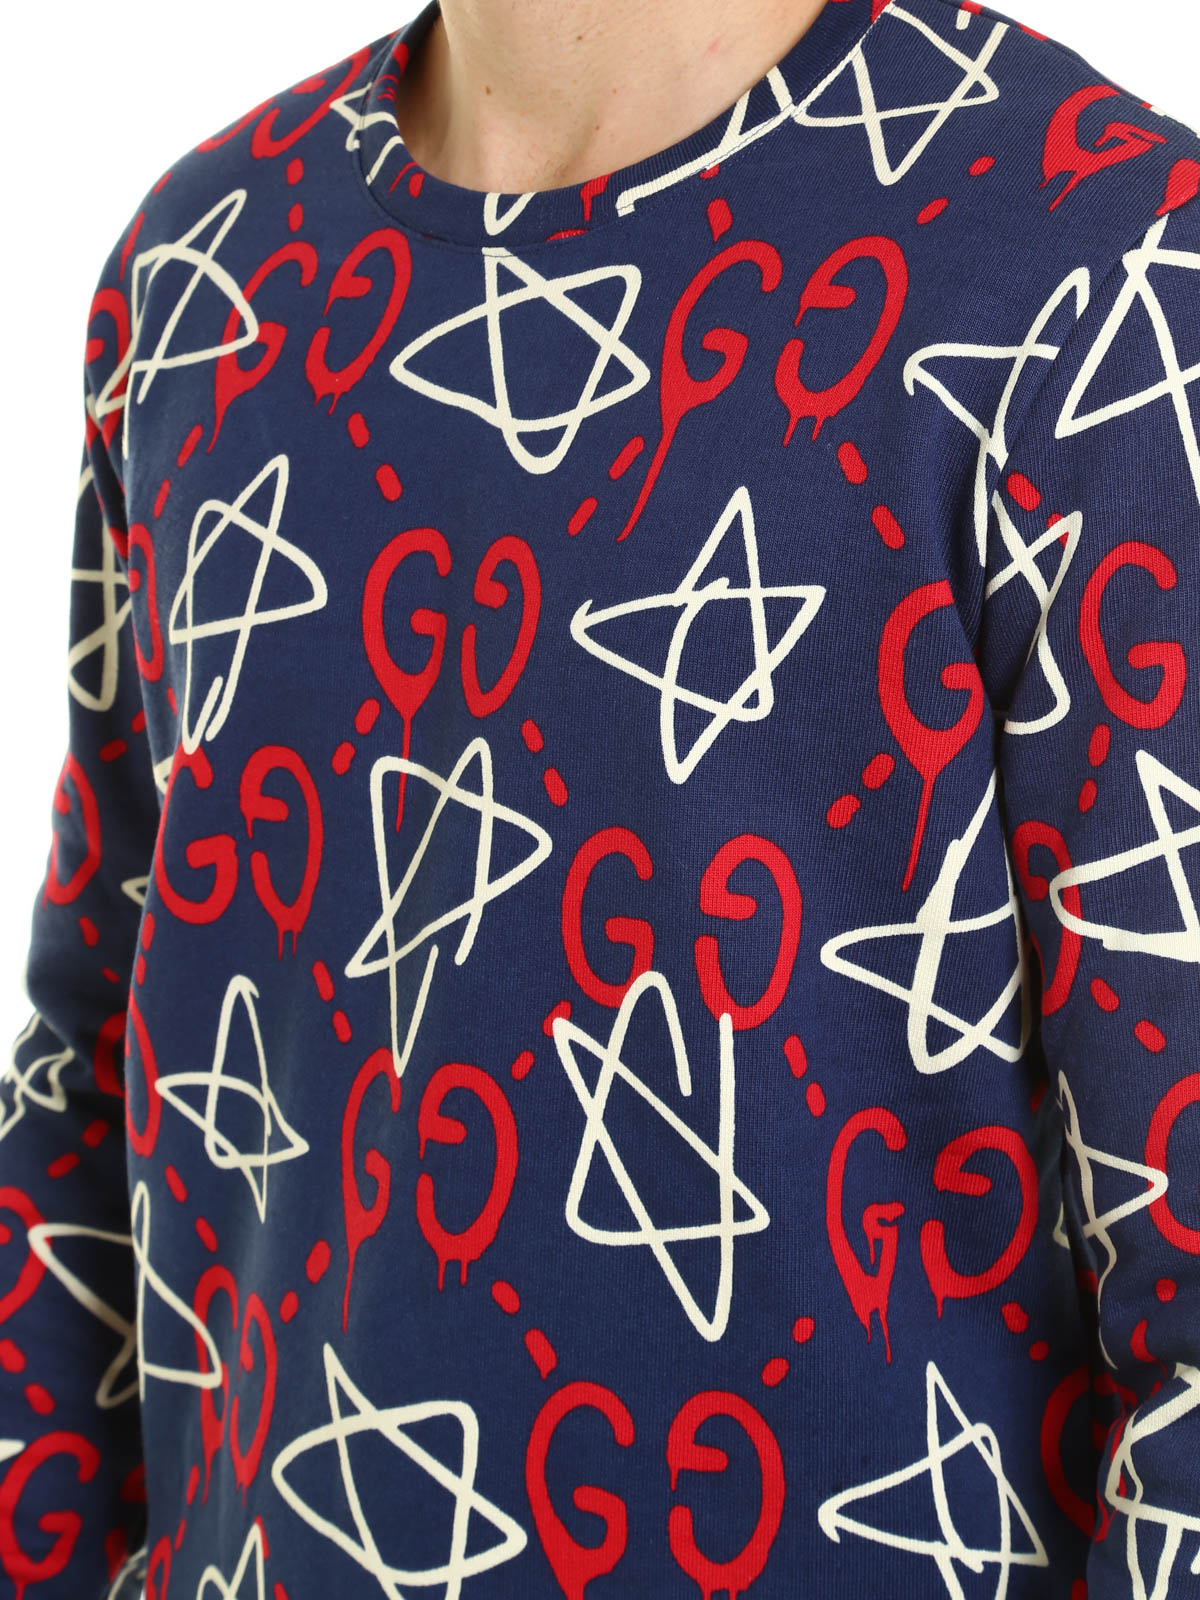 guccighost star shirt, OFF 76%,www 